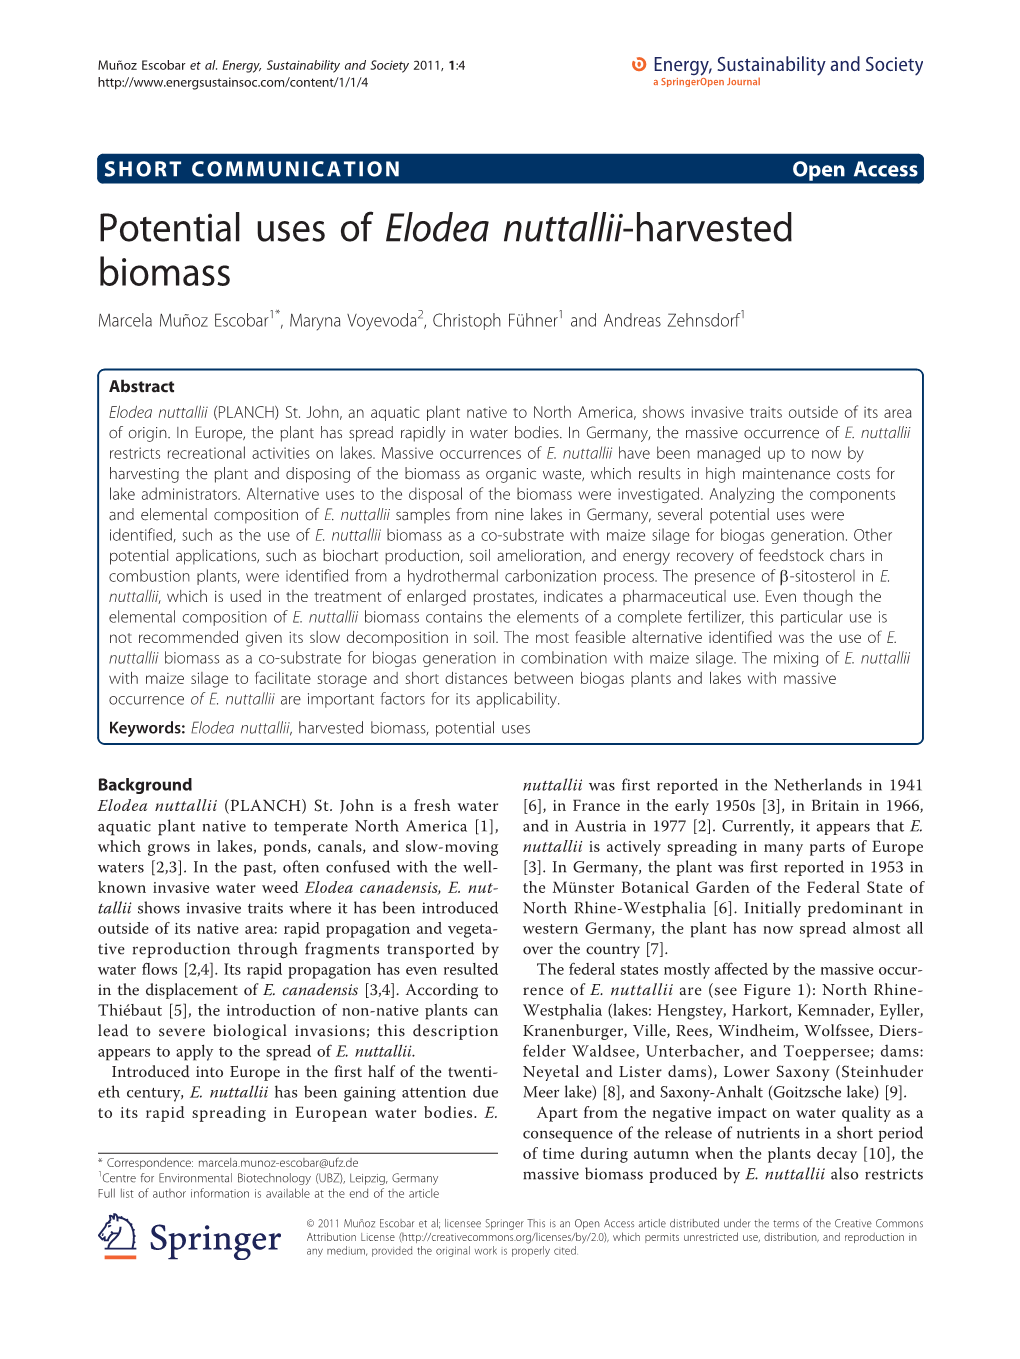 Potential Uses of Elodea Nuttallii-Harvested Biomass Marcela Muñoz Escobar1*, Maryna Voyevoda2, Christoph Fühner1 and Andreas Zehnsdorf1